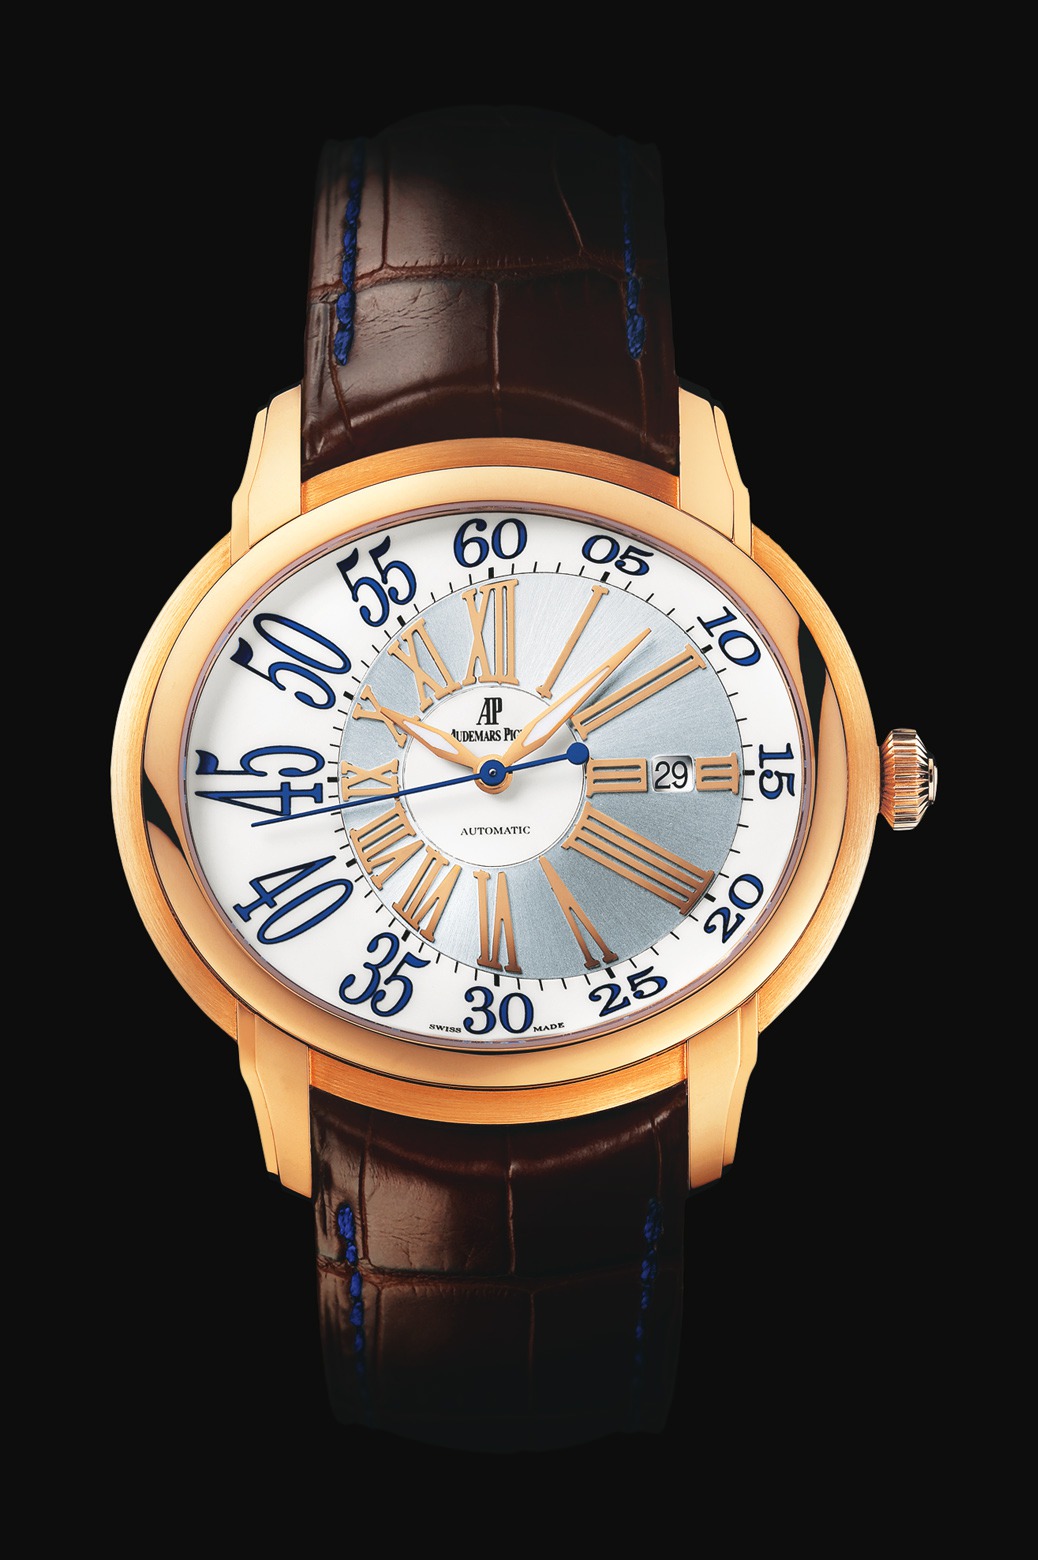 Audemars Piguet Millenary Automatic Pink Gold watch REF: 15320OR.OO.D093CR.01